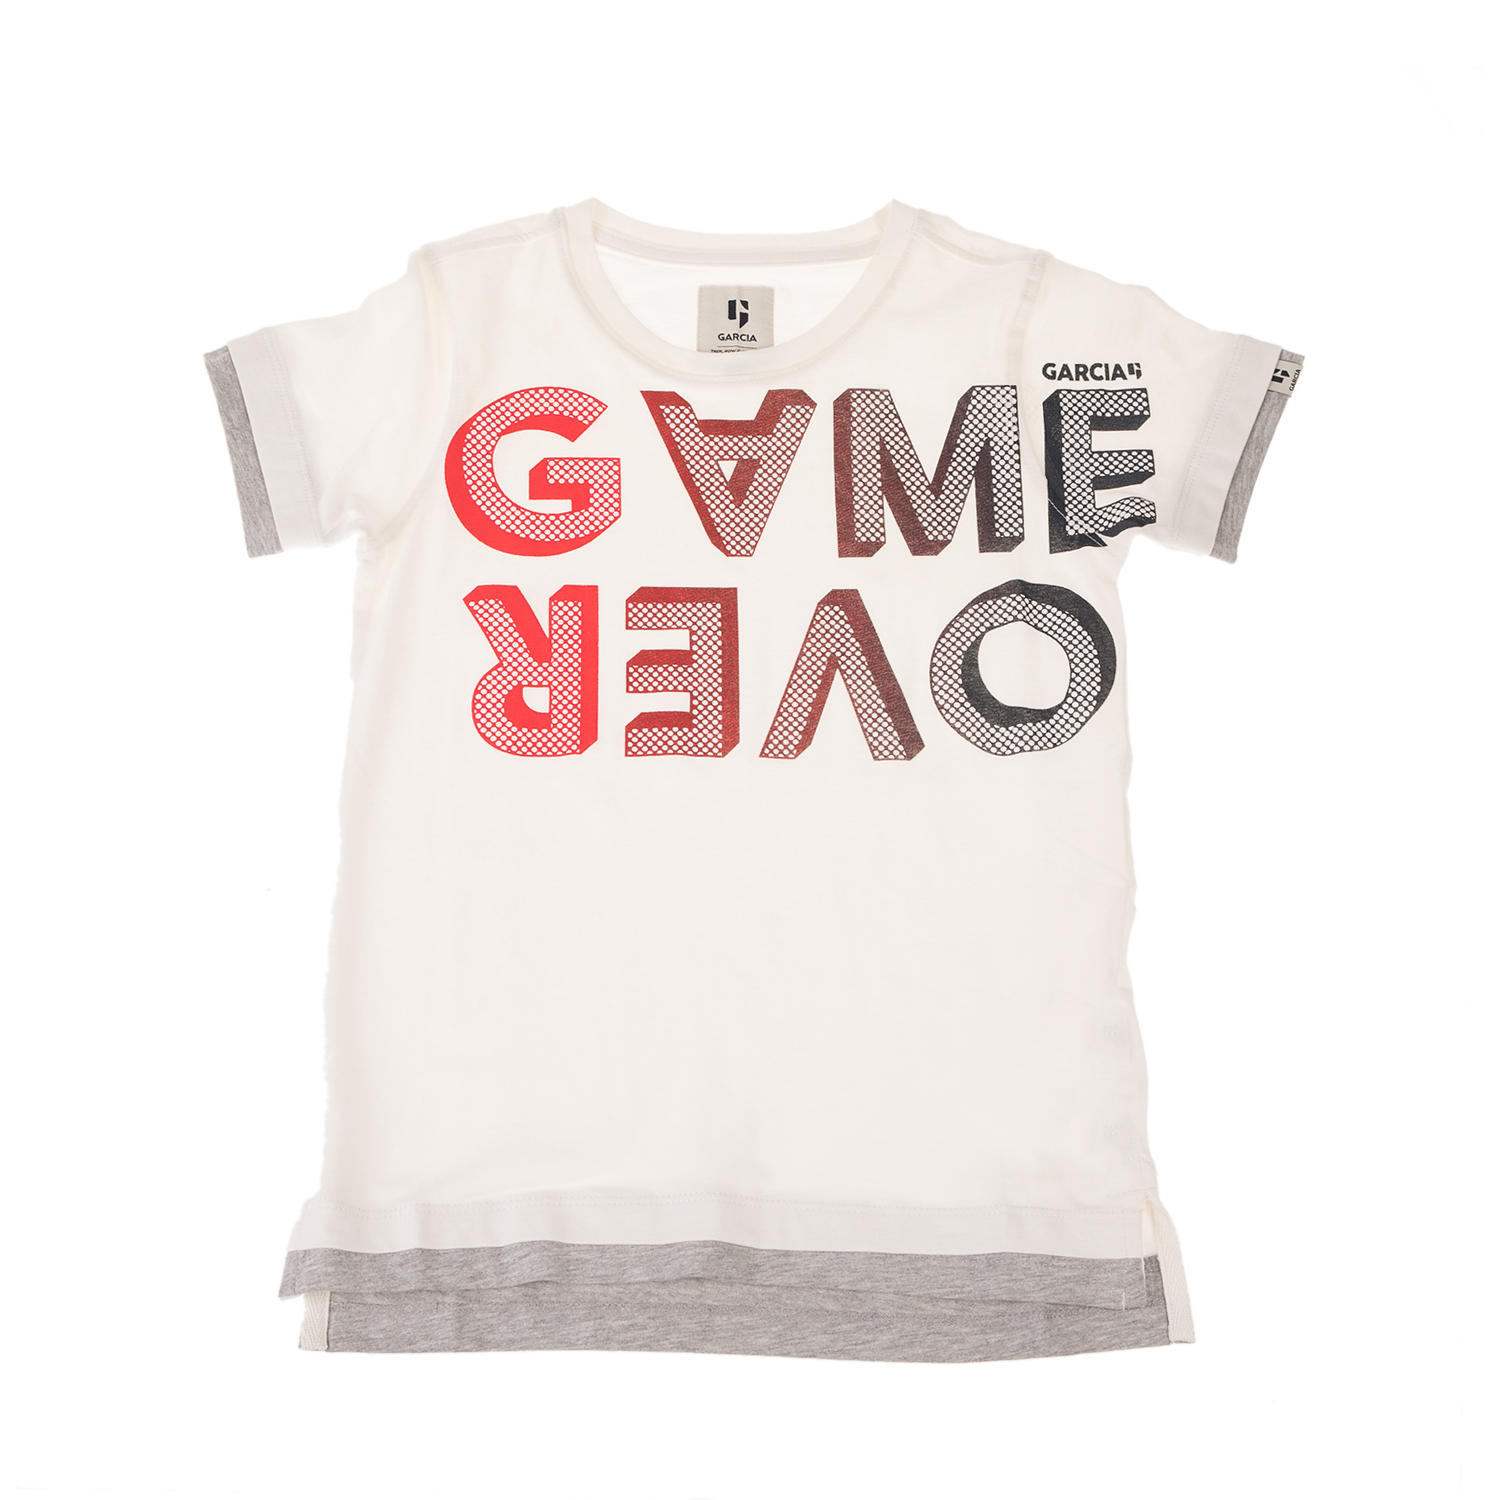 GARCIA JEANS - Παιδικό t-shirt για αγόρια GARCIA JEANS εκρού Παιδικά/Boys/Ρούχα/Μπλούζες Κοντομάνικες-Αμάνικες